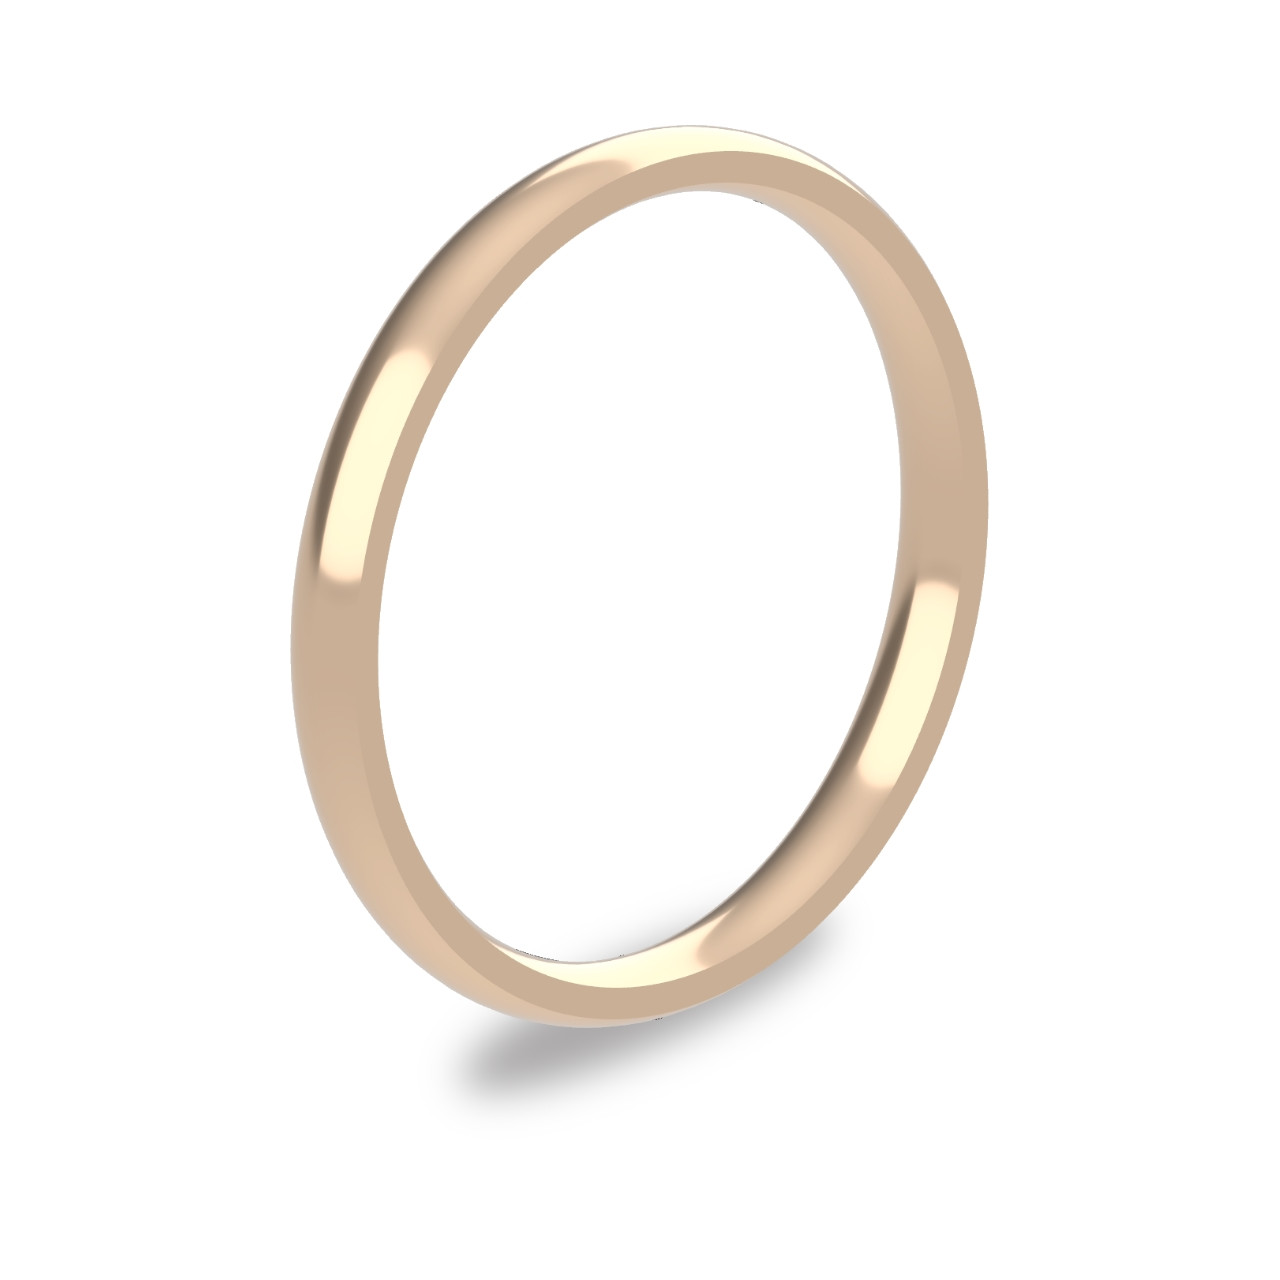 Rose gold engagement rings Archives - McCaul Goldsmiths